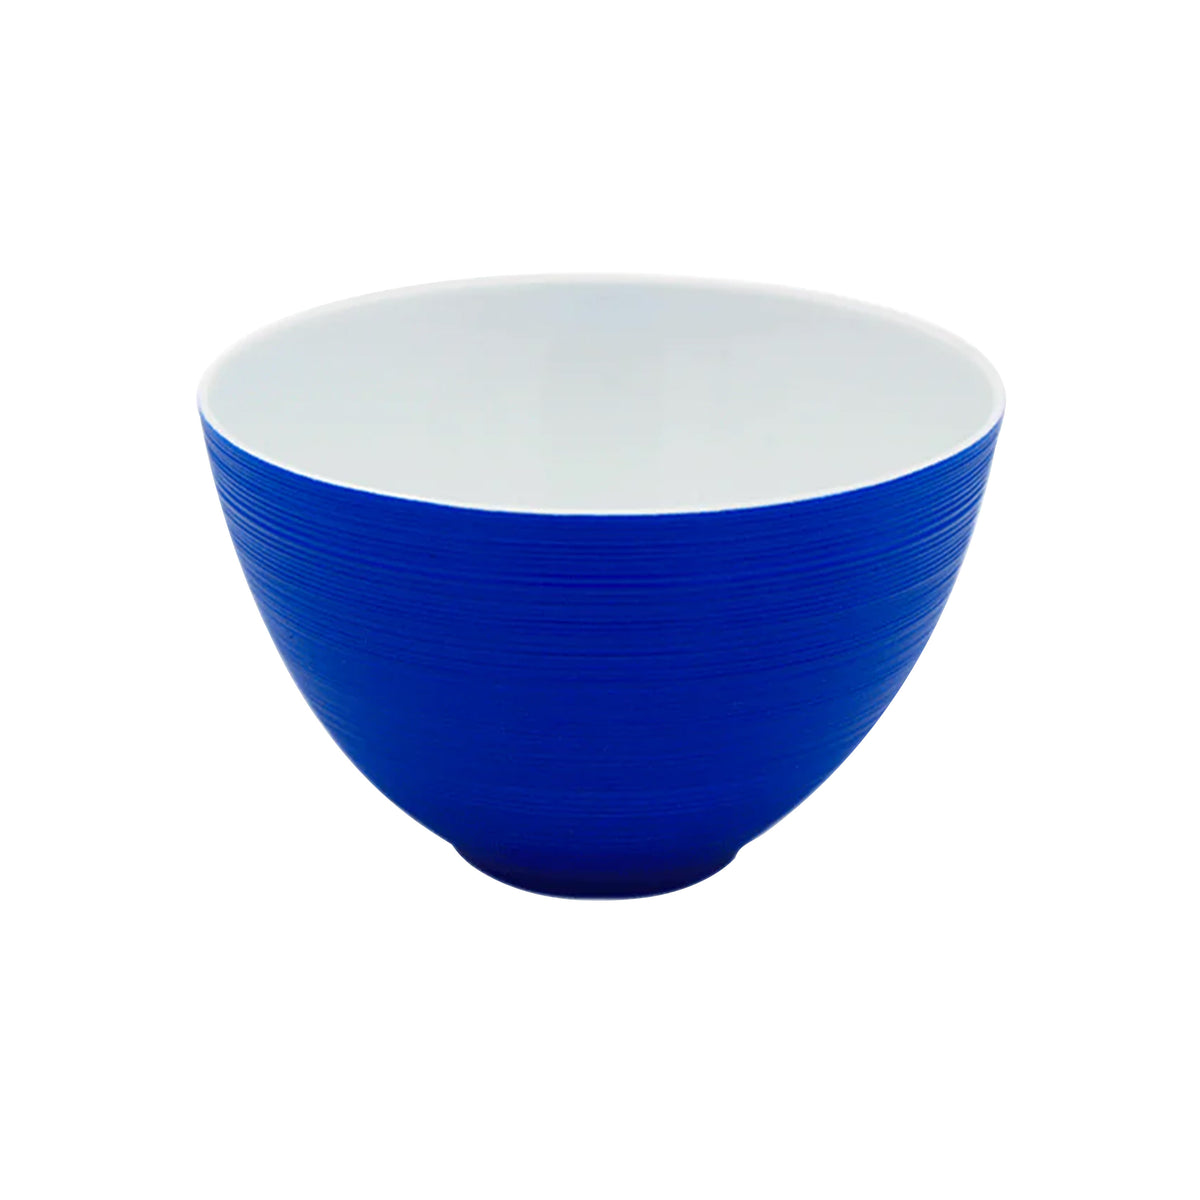 HEMISPHERE Royal Blue - Bowl, extra